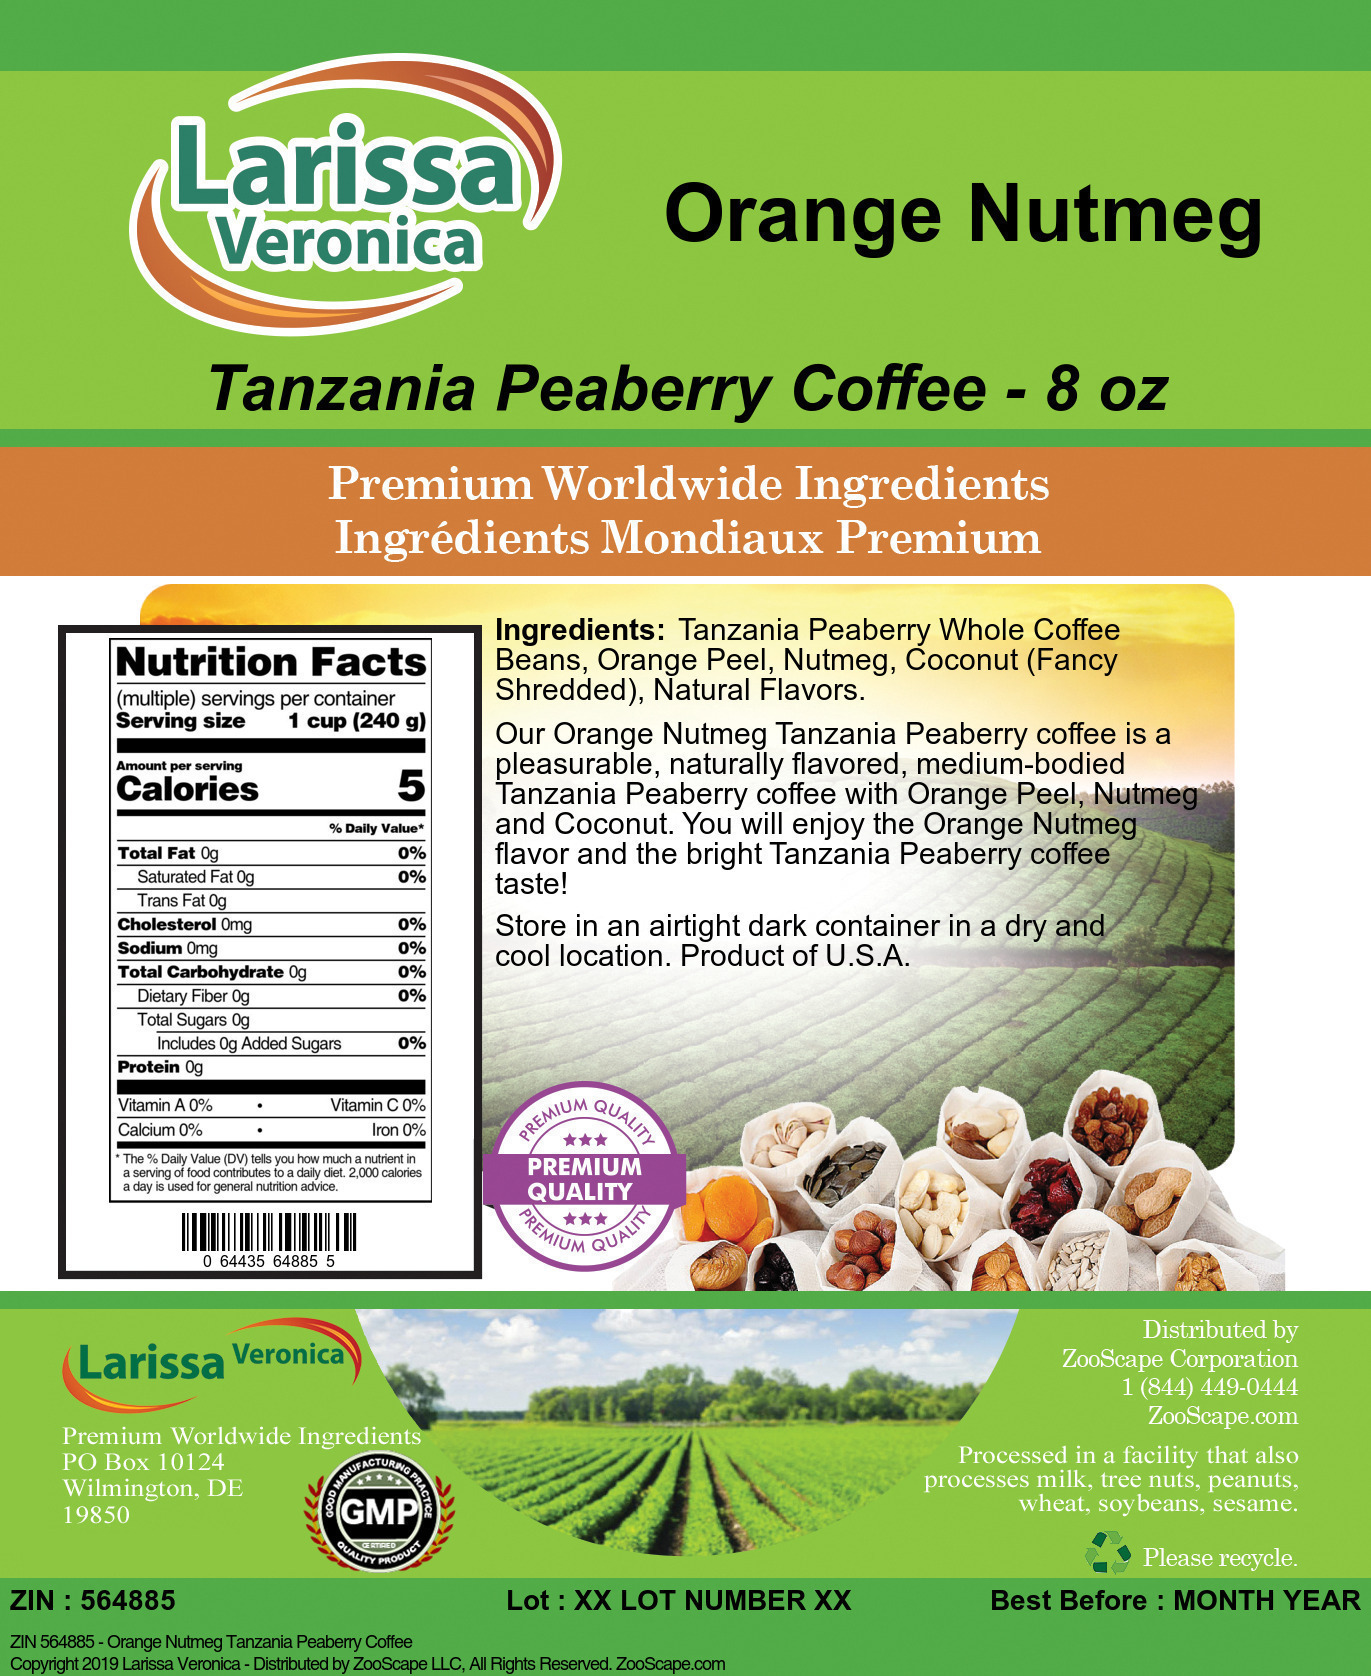 Orange Nutmeg Tanzania Peaberry Coffee - Label